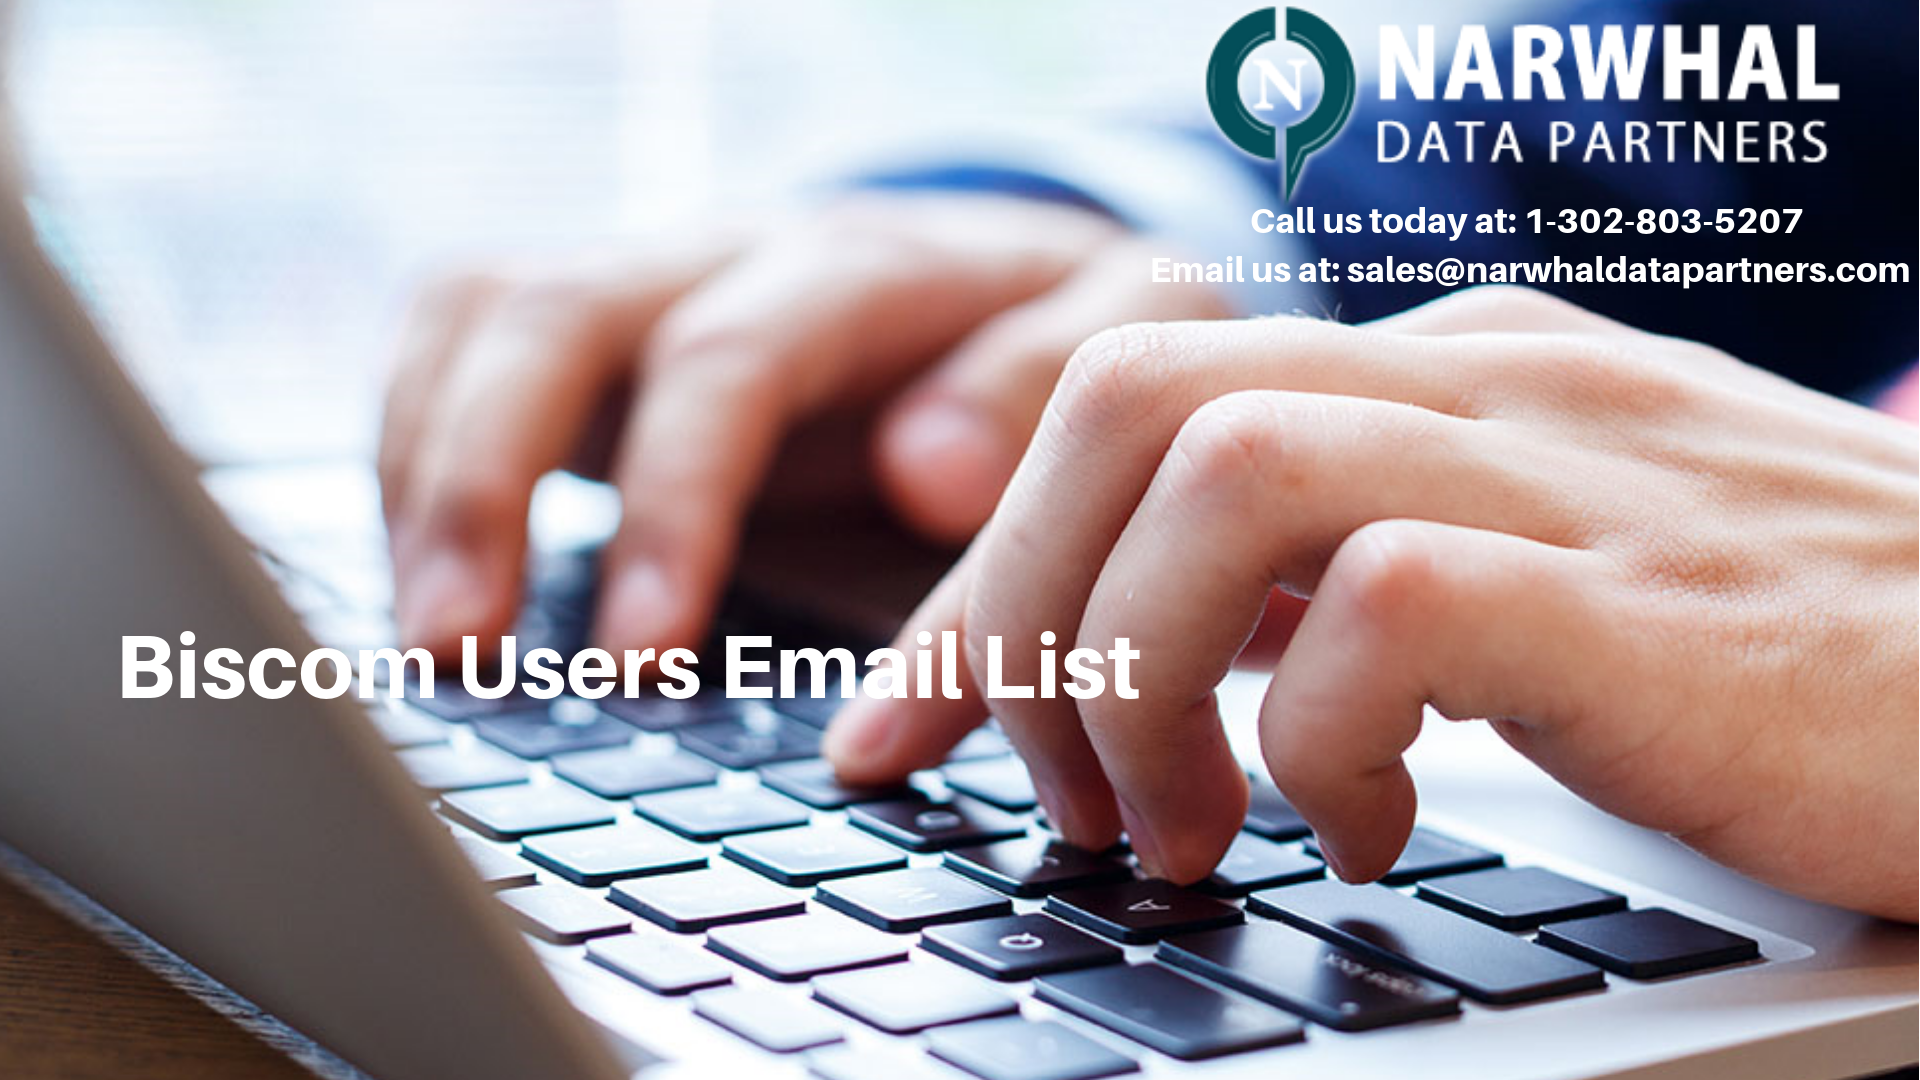 http://narwhaldatapartners.com/biscom-users-email-list.html